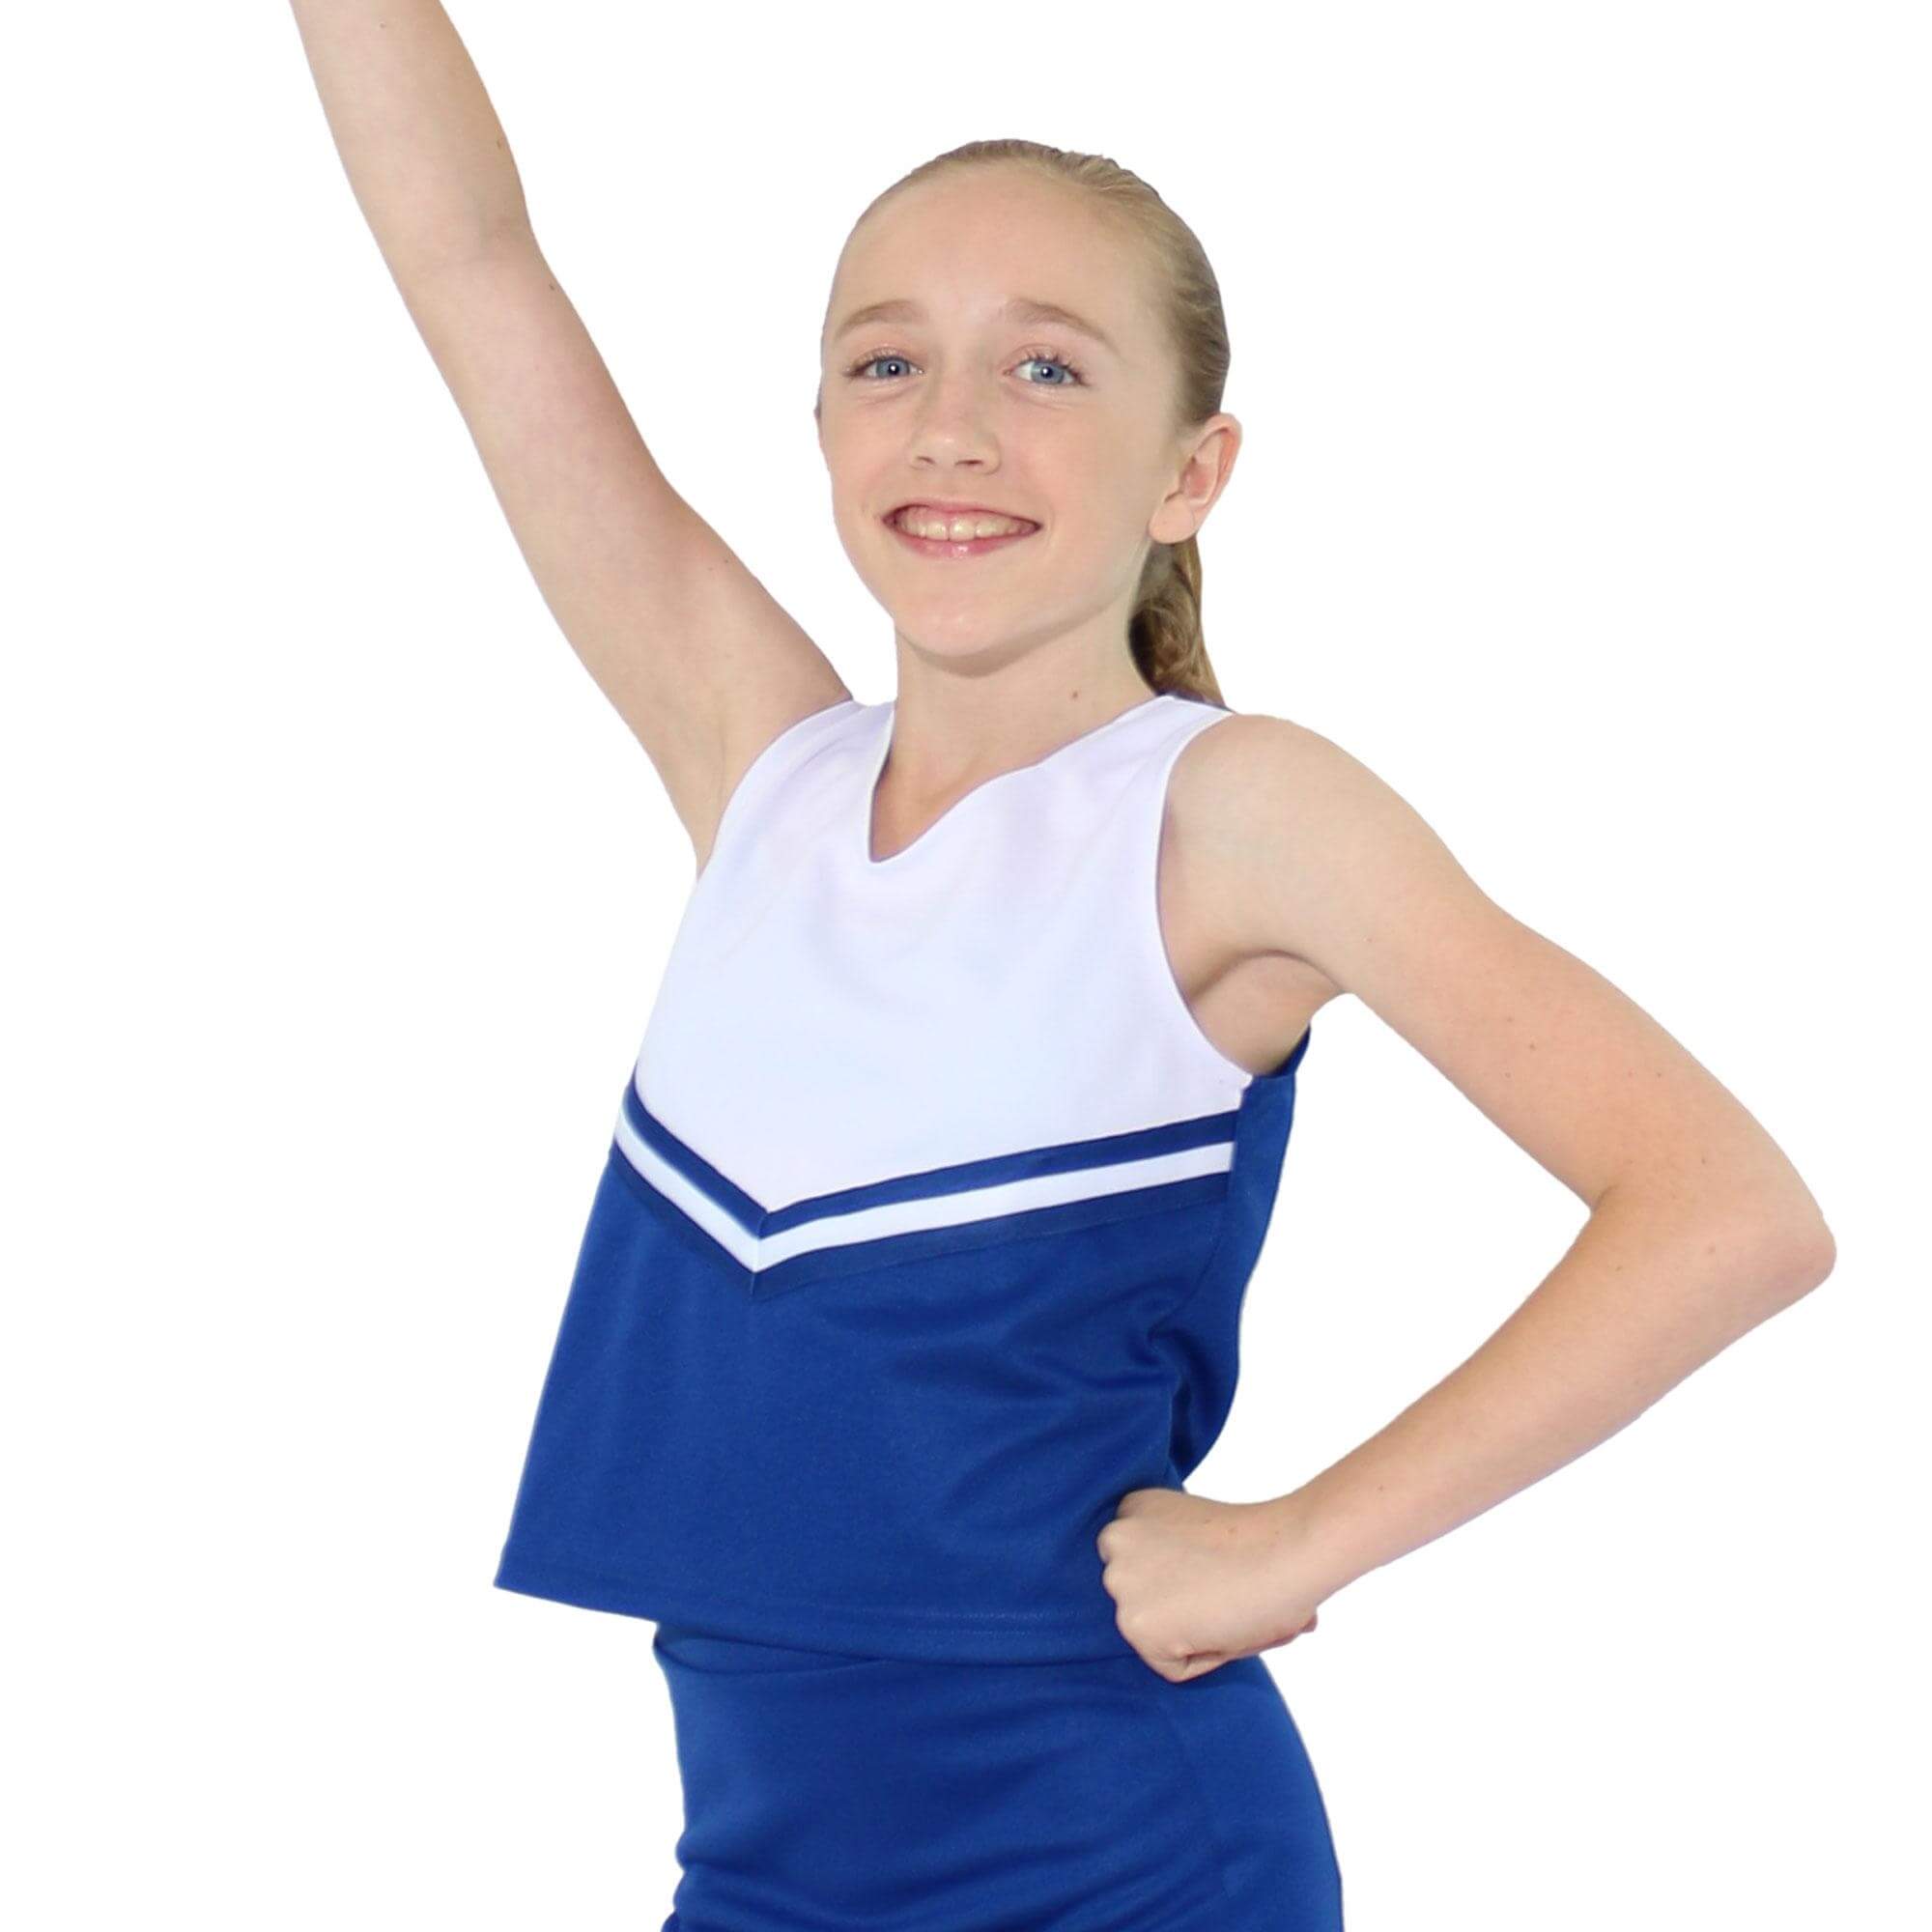 Danzcue Womens 2-Color Kick Sweetheart Cheerleaders Uniform Shell Top 